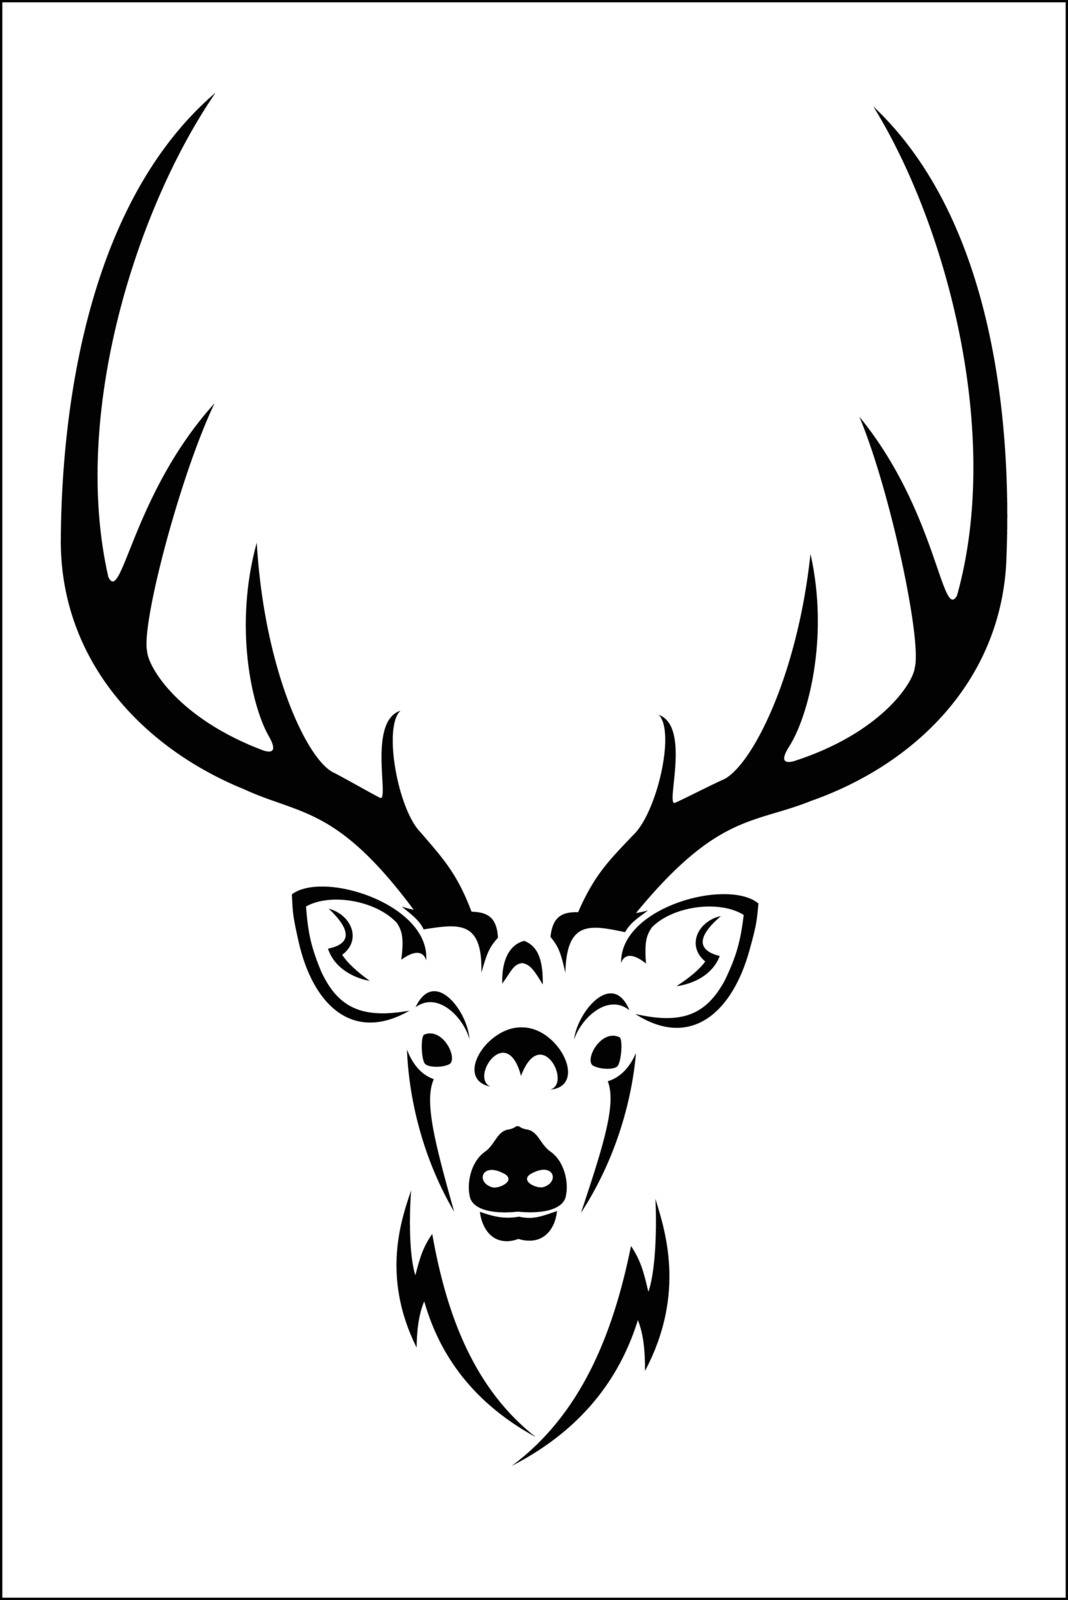 Deer symbol by fxmdk